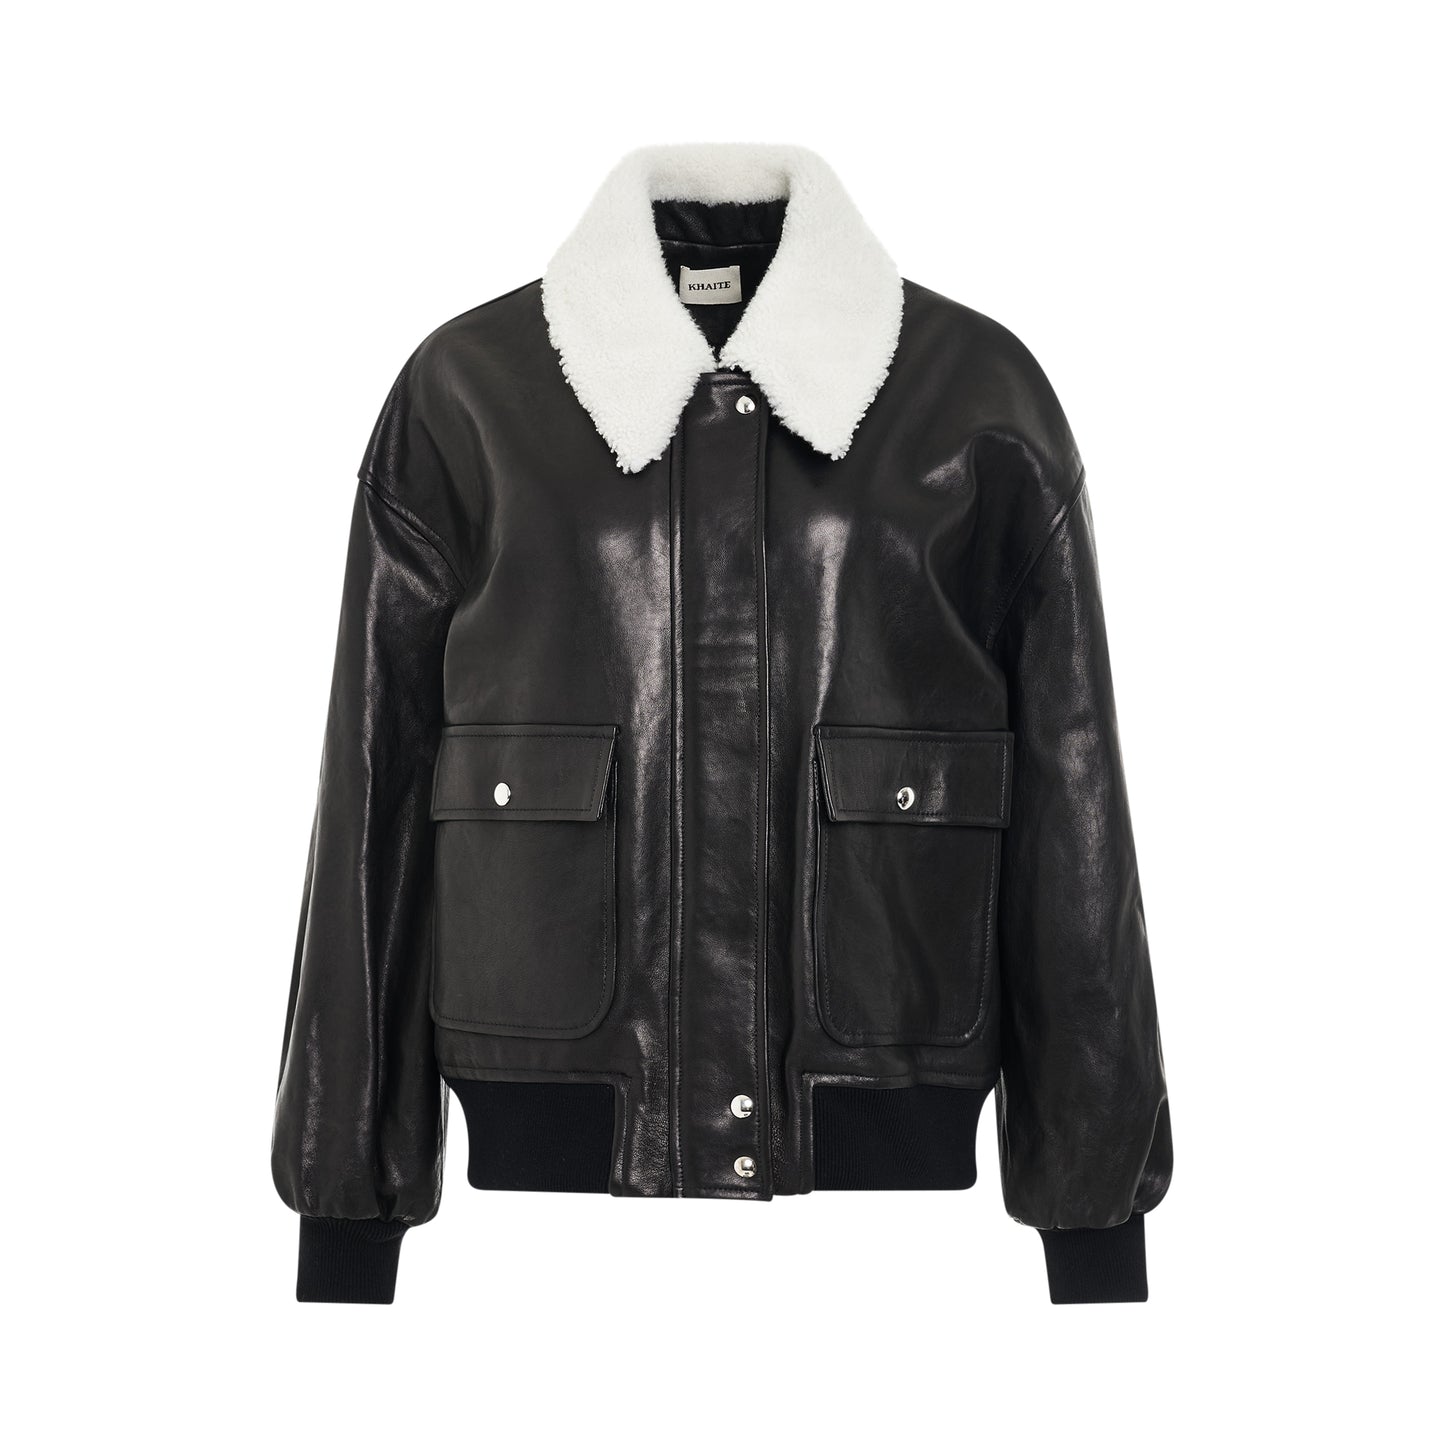 Shellar Leather Jacket in Black